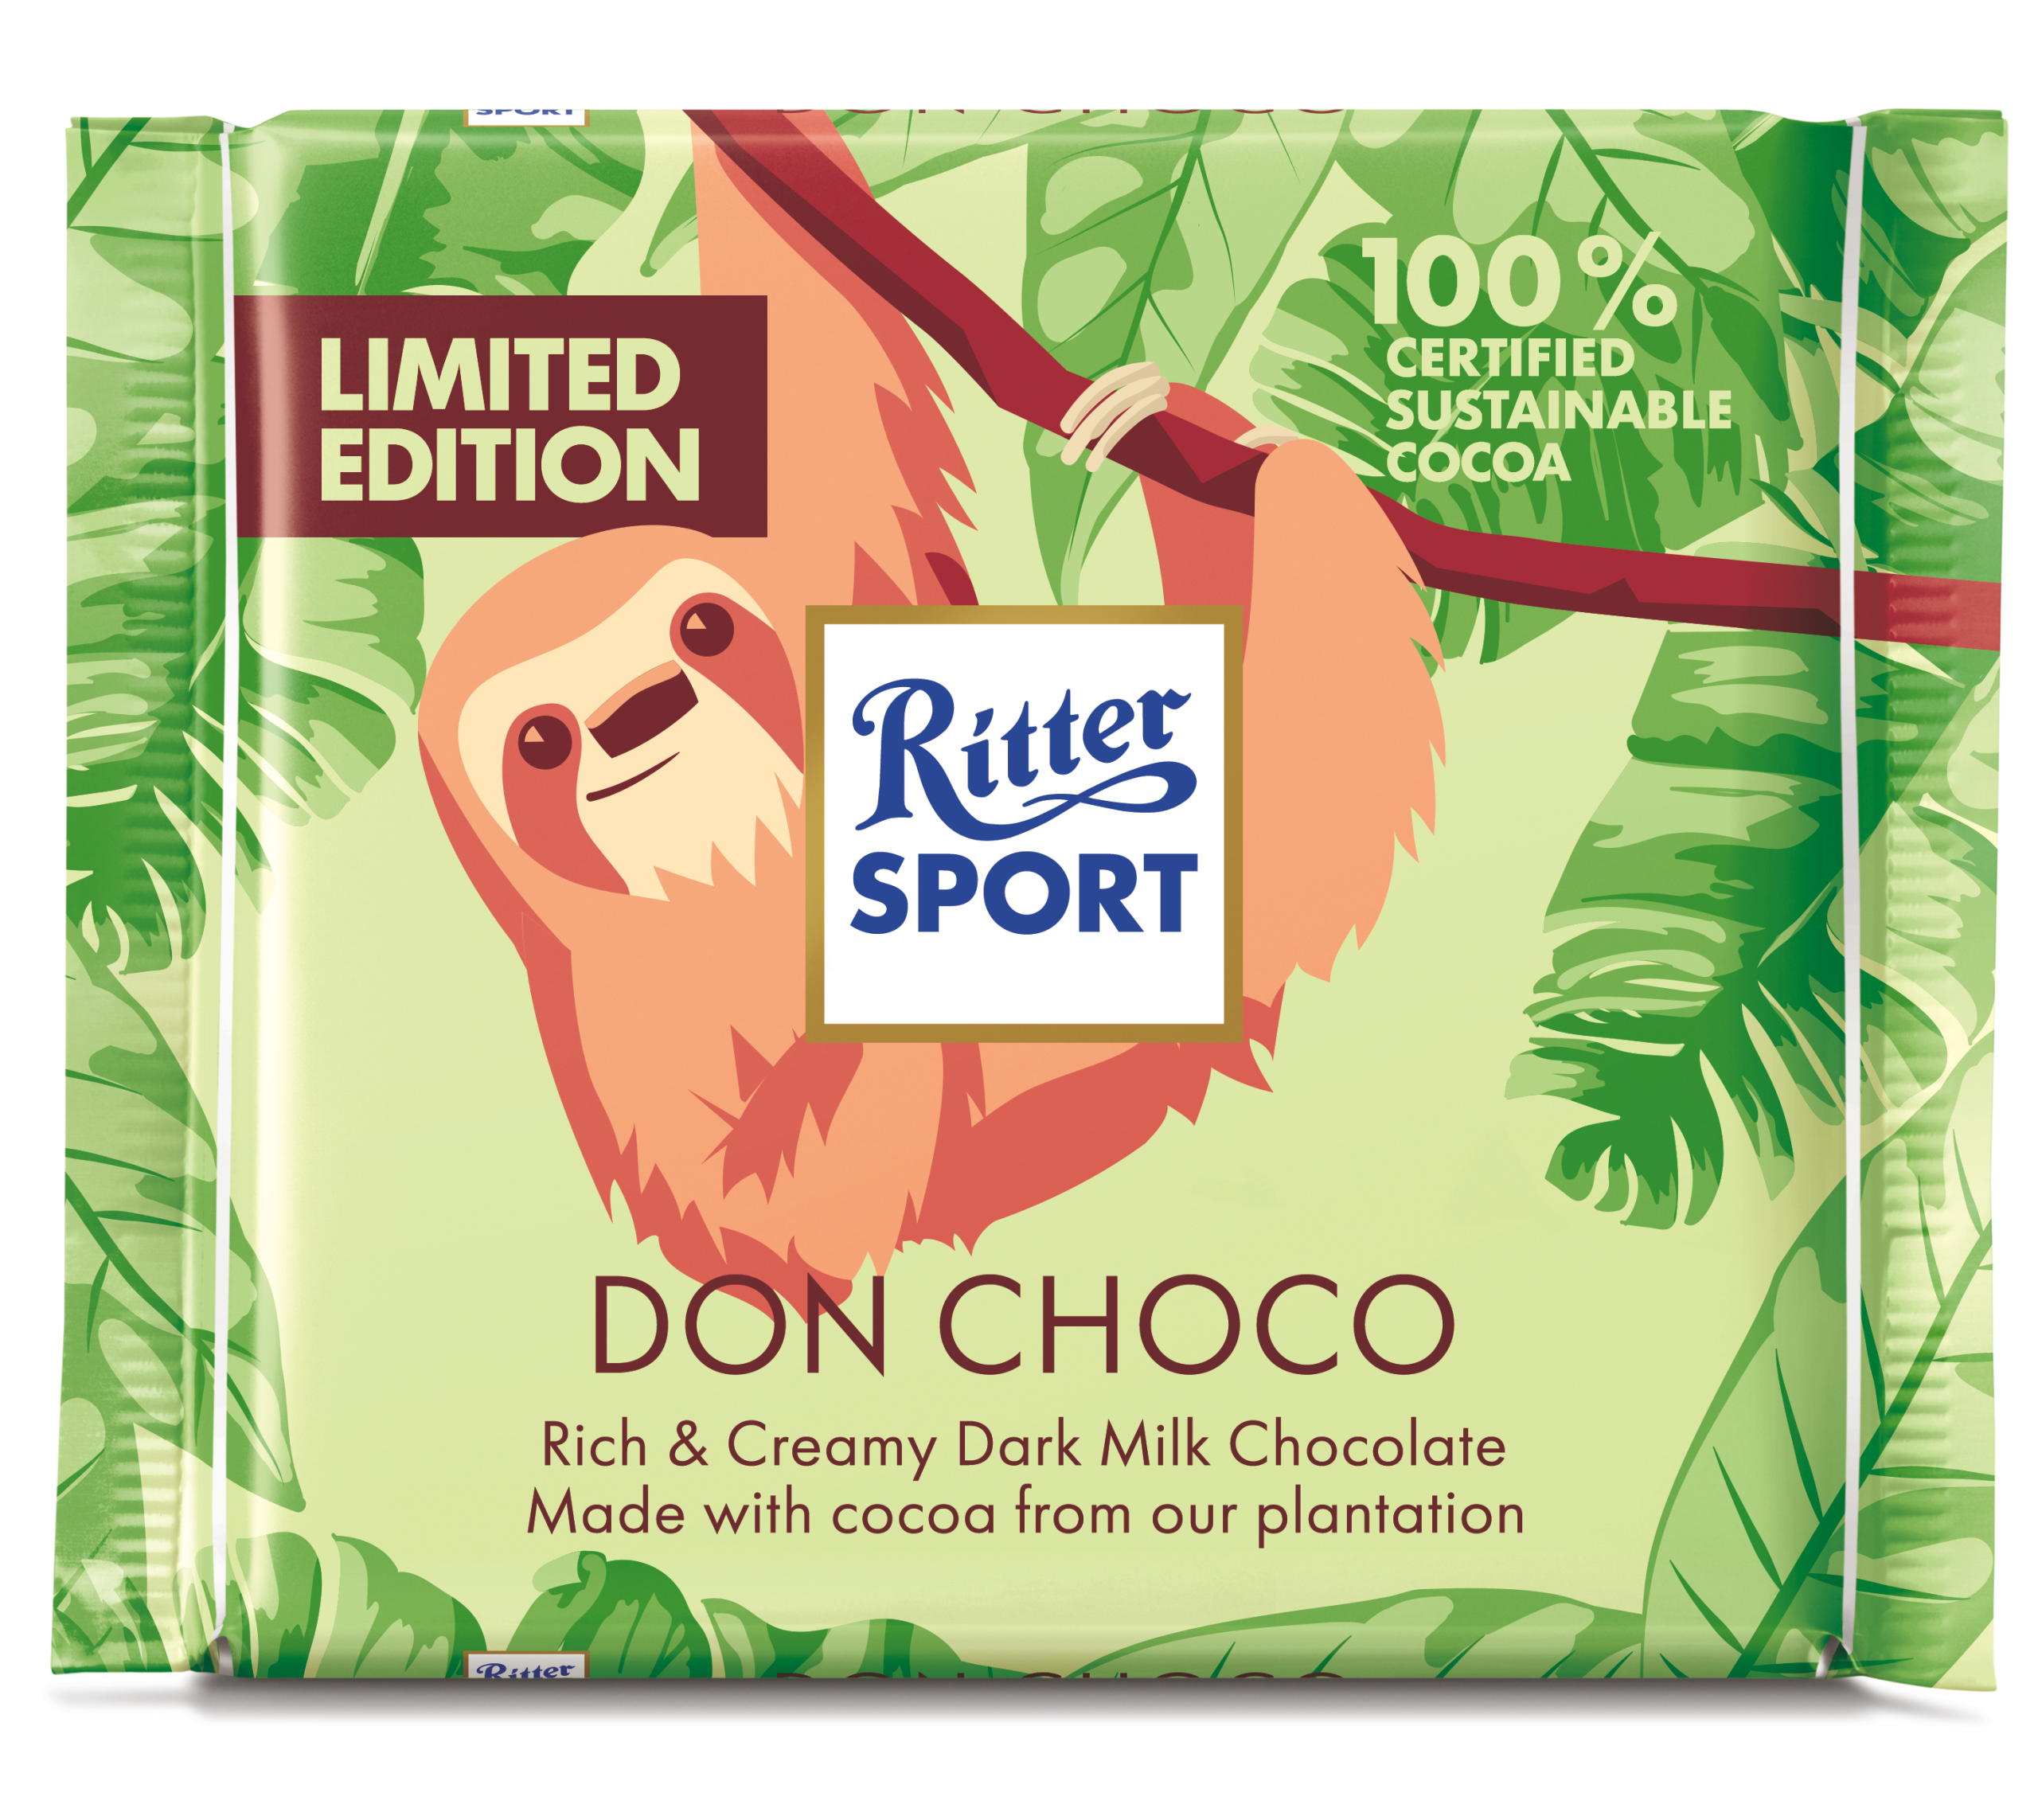 Don Choco swings into stores – Ritter Sport’s first dark milk bar